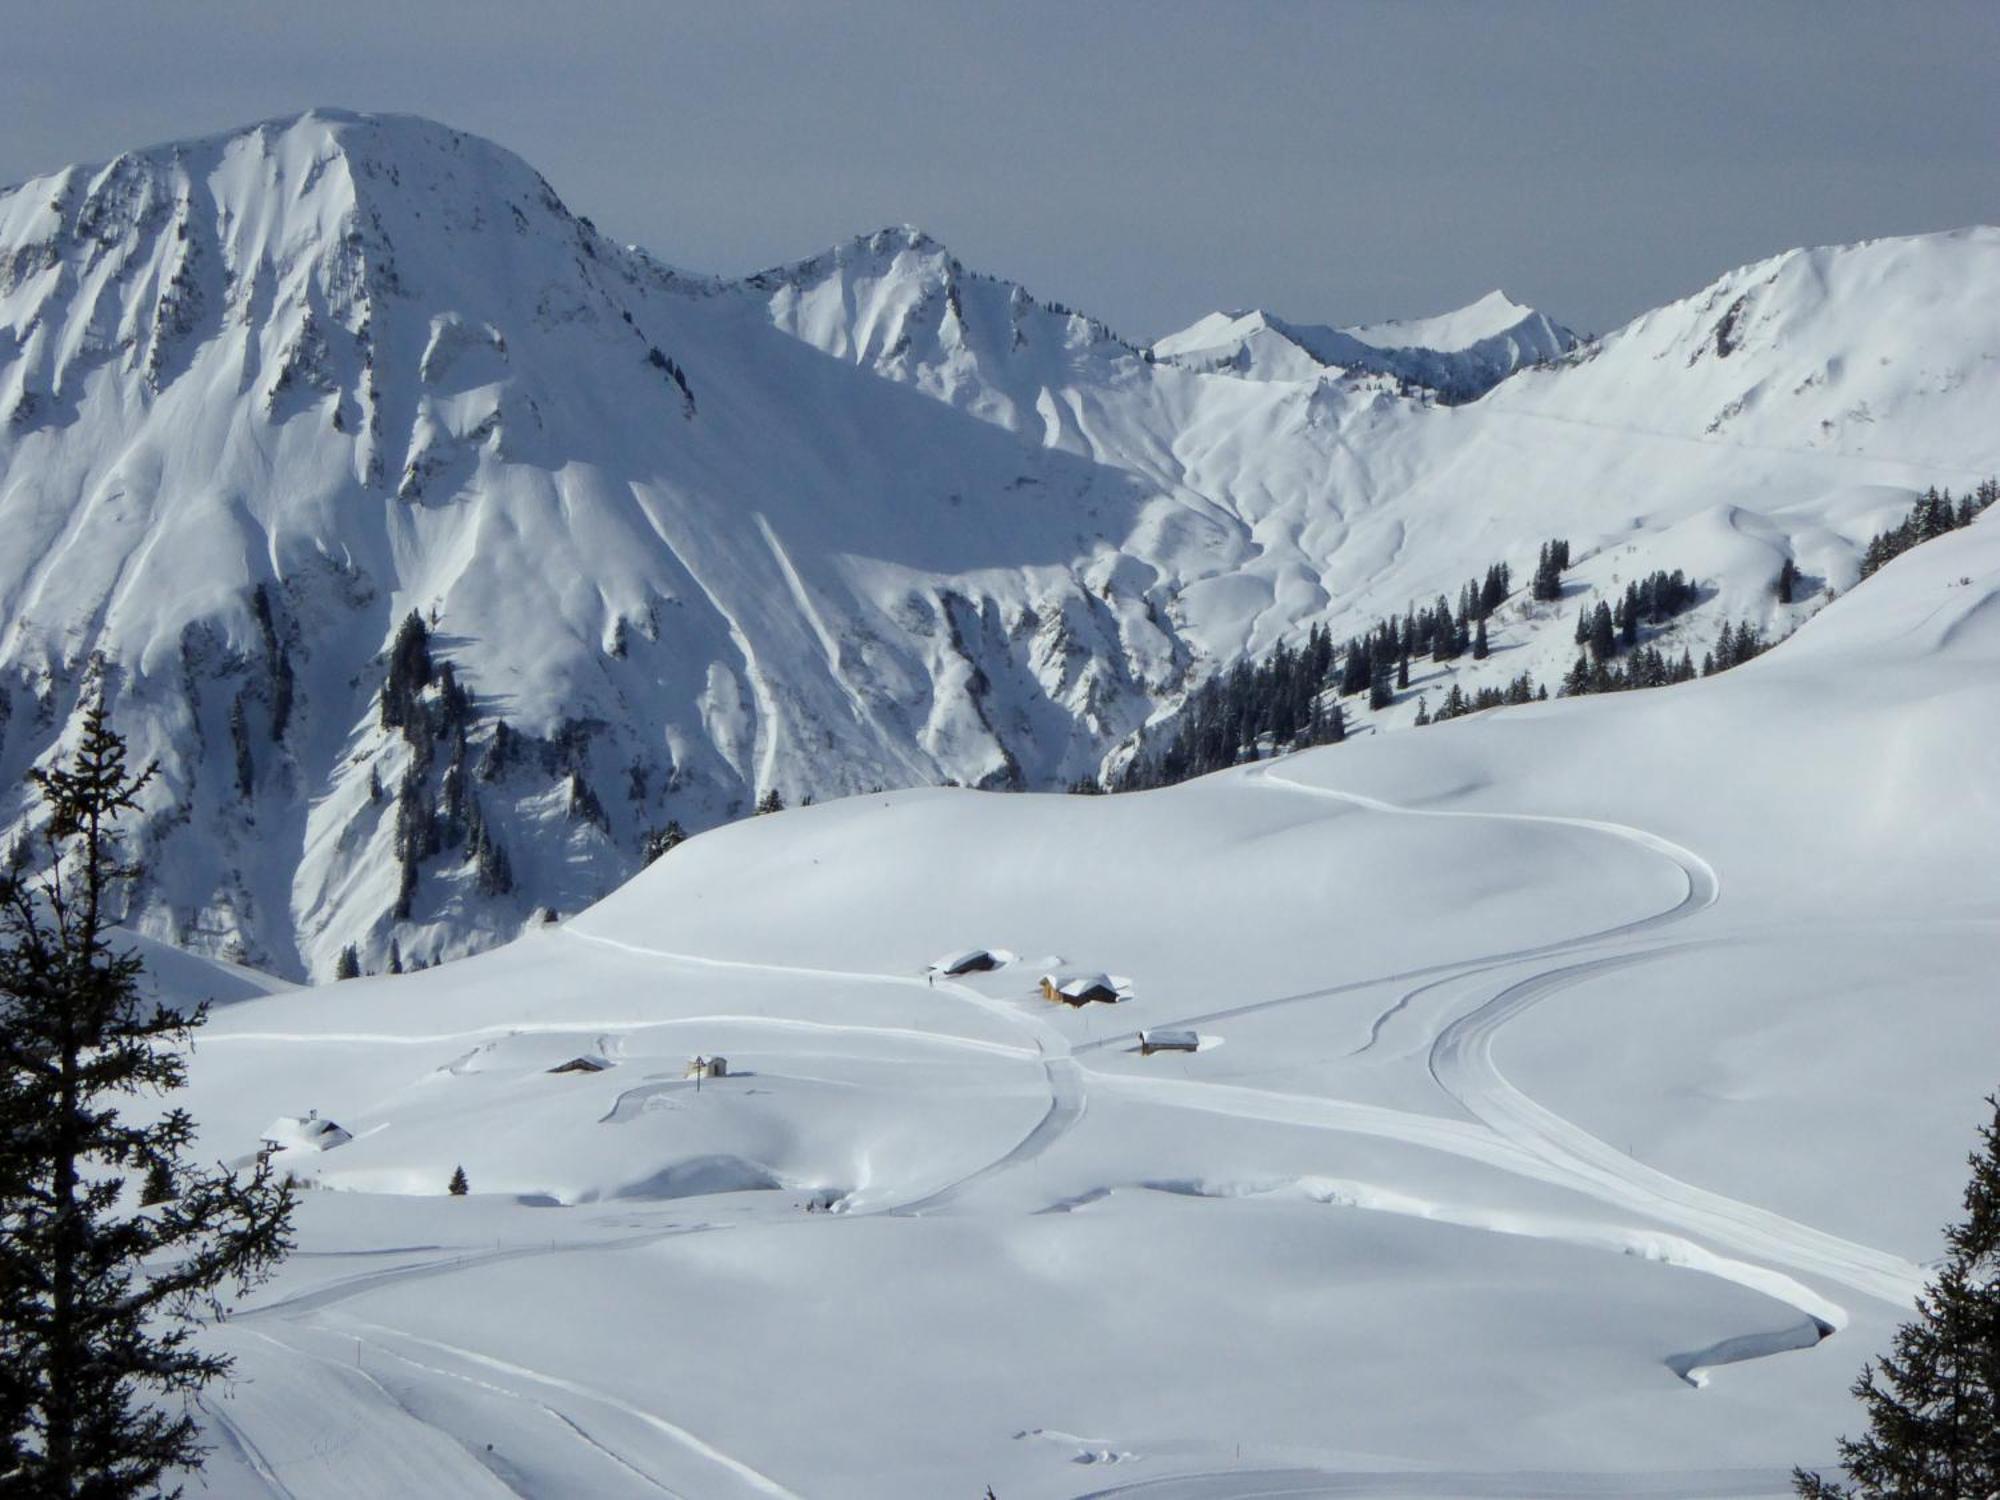 Das Alpine Lifestyle Berghotel Madlener Damuels Exterior foto